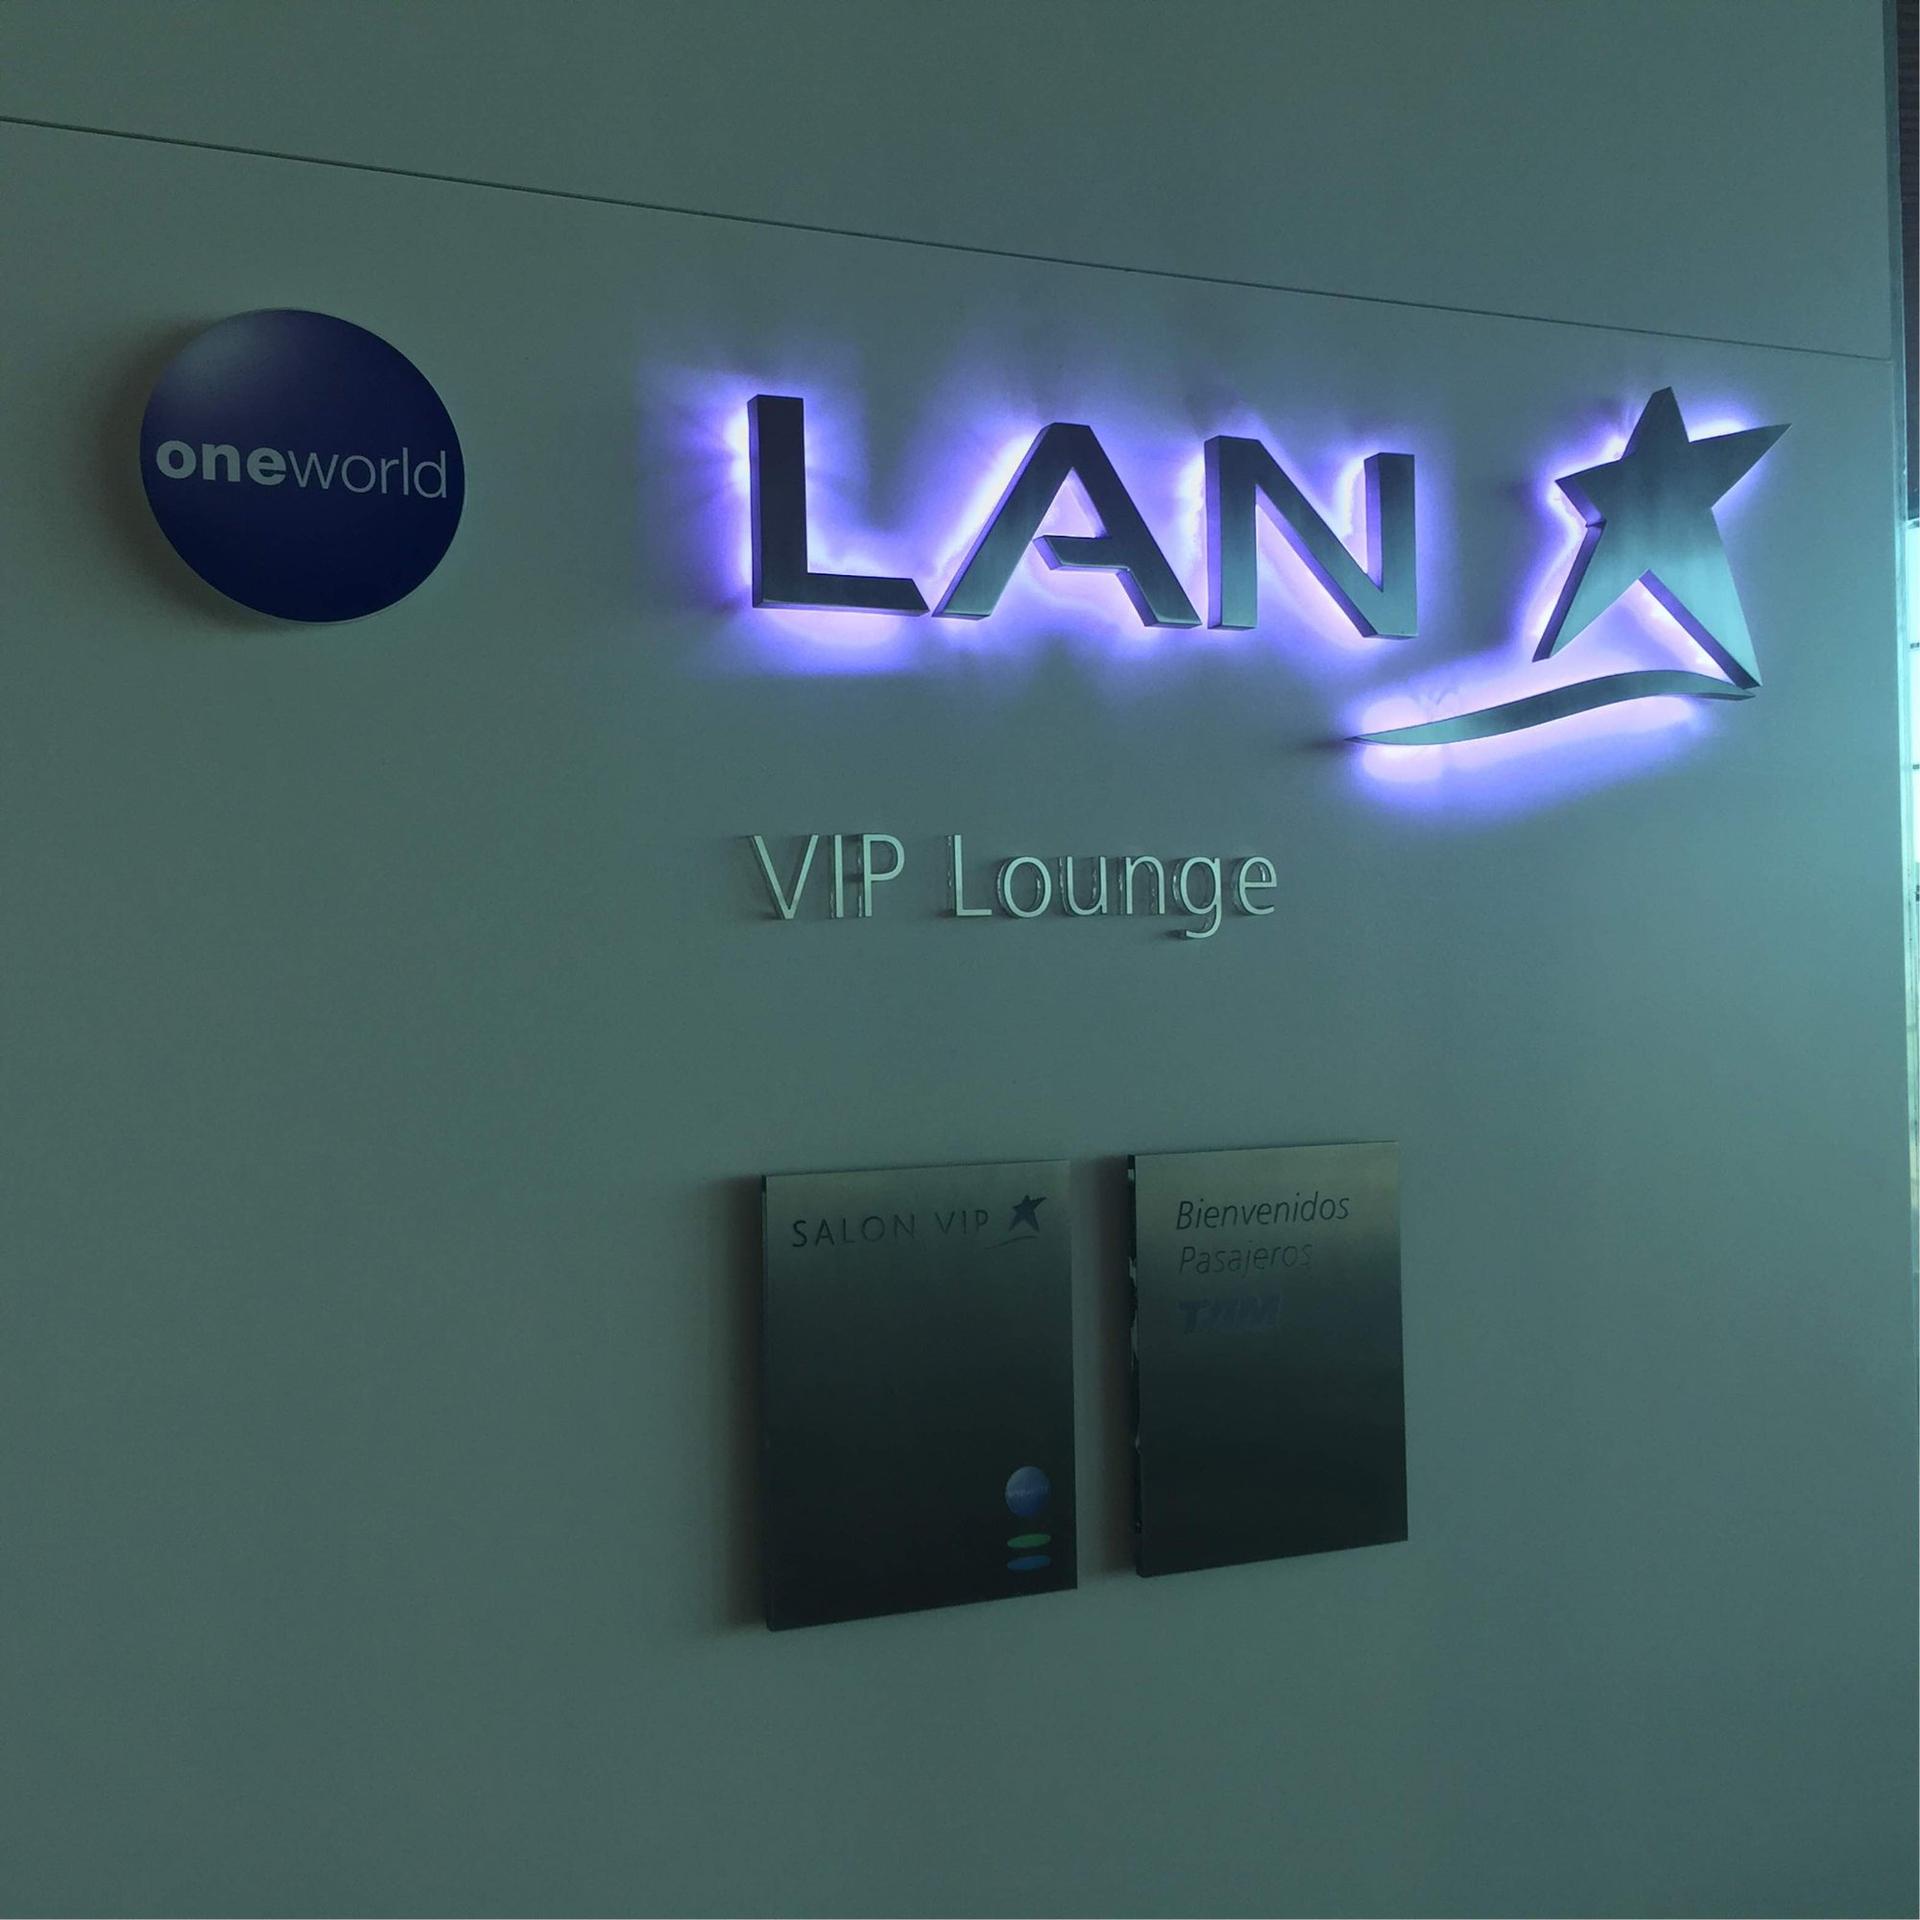 LATAM VIP Lounge image 5 of 15